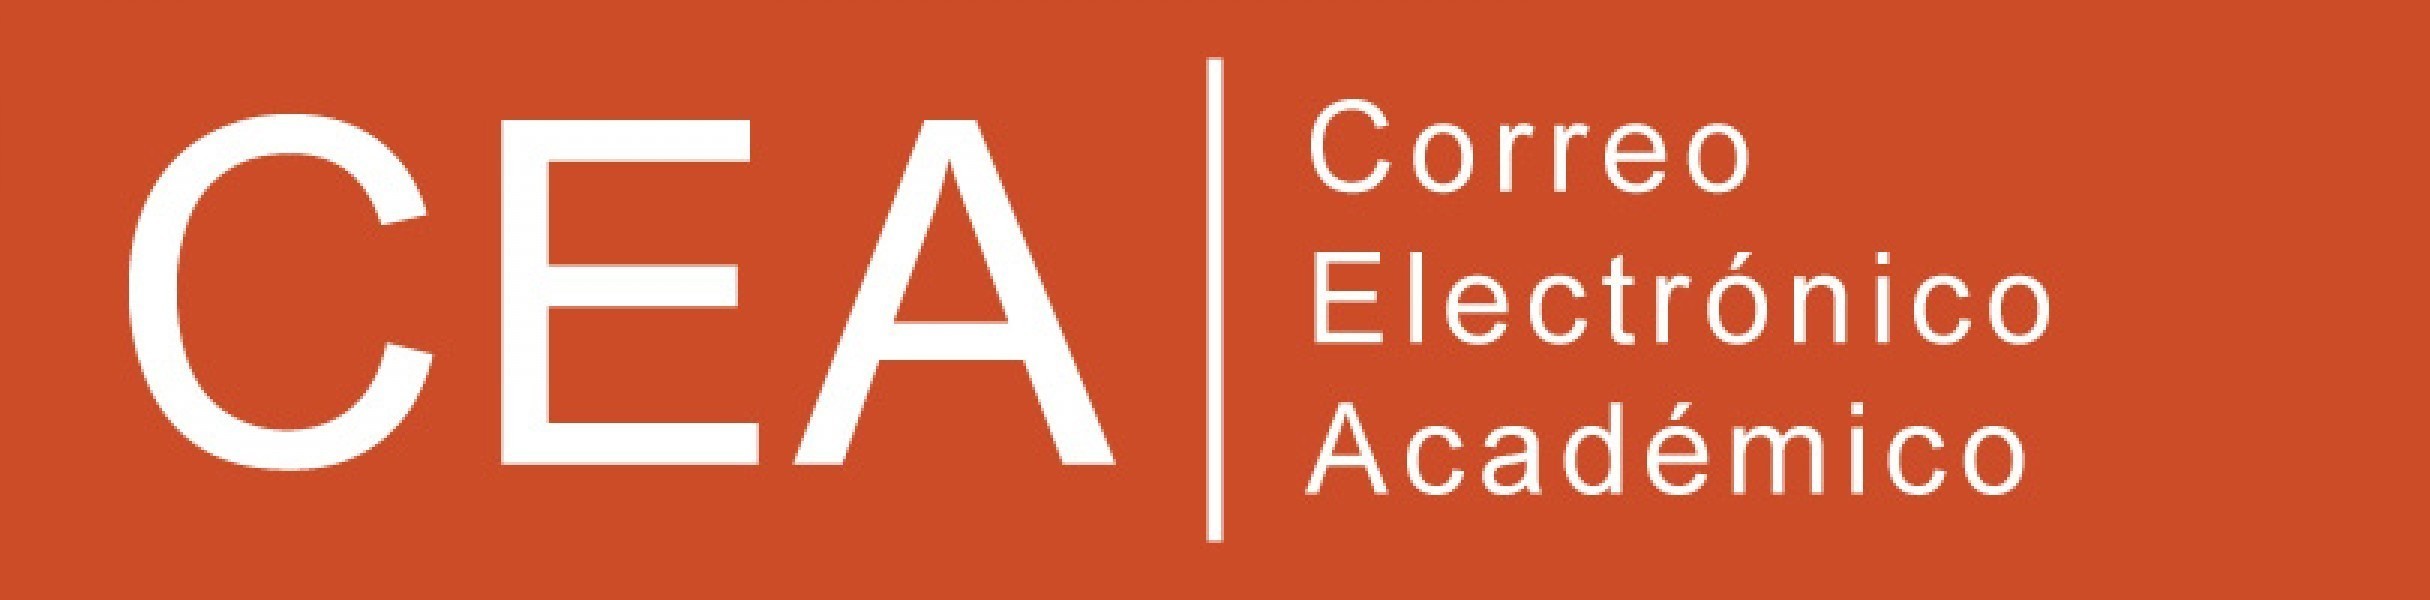 Correo Electrónico Académico (CEA)